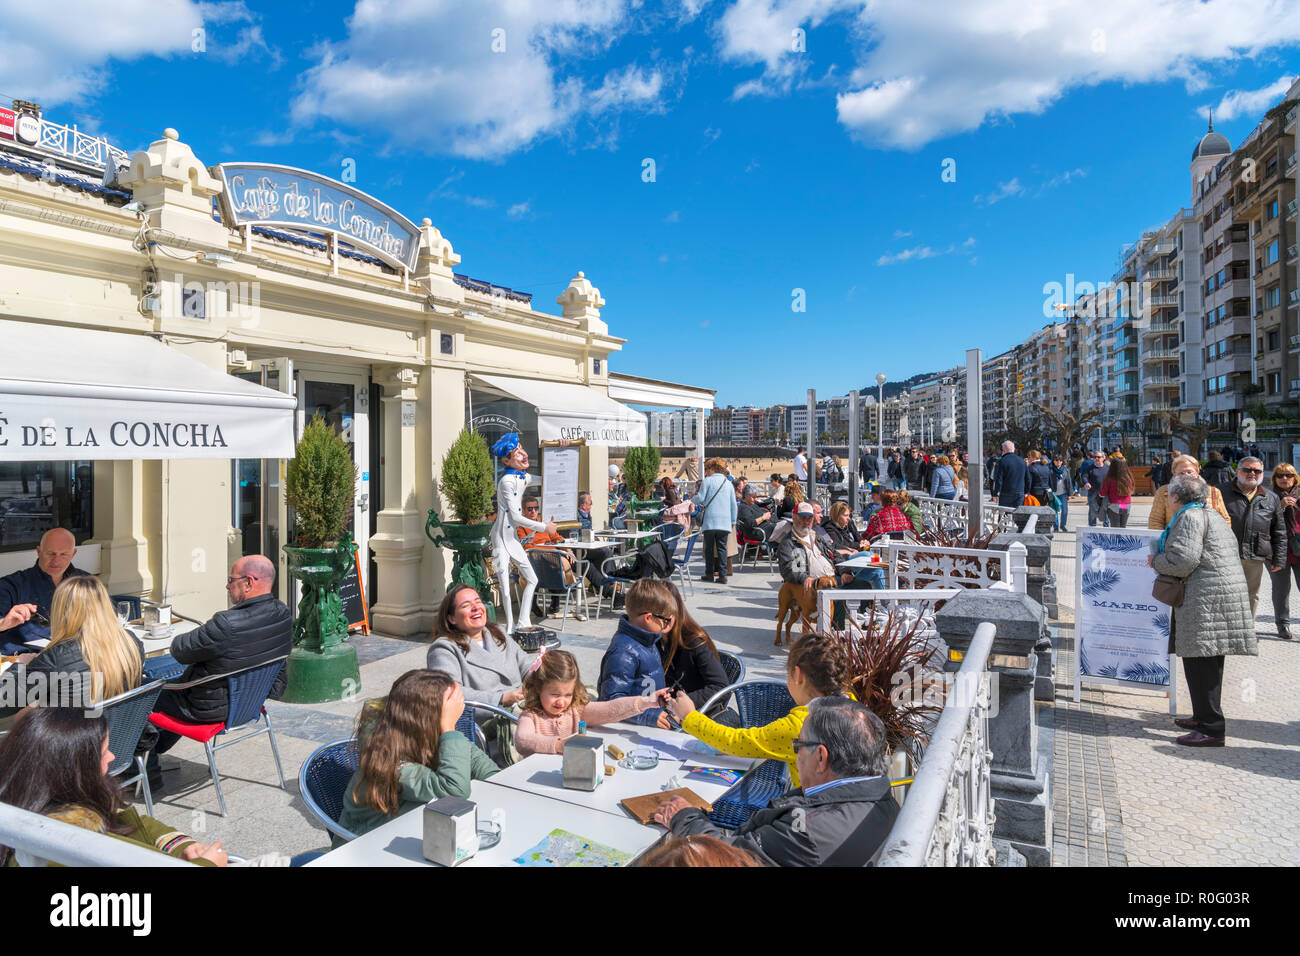 Cafe on the seafront promenade, Playa de la Concha, San Sebastian, Basque Country, Spain Stock Photo